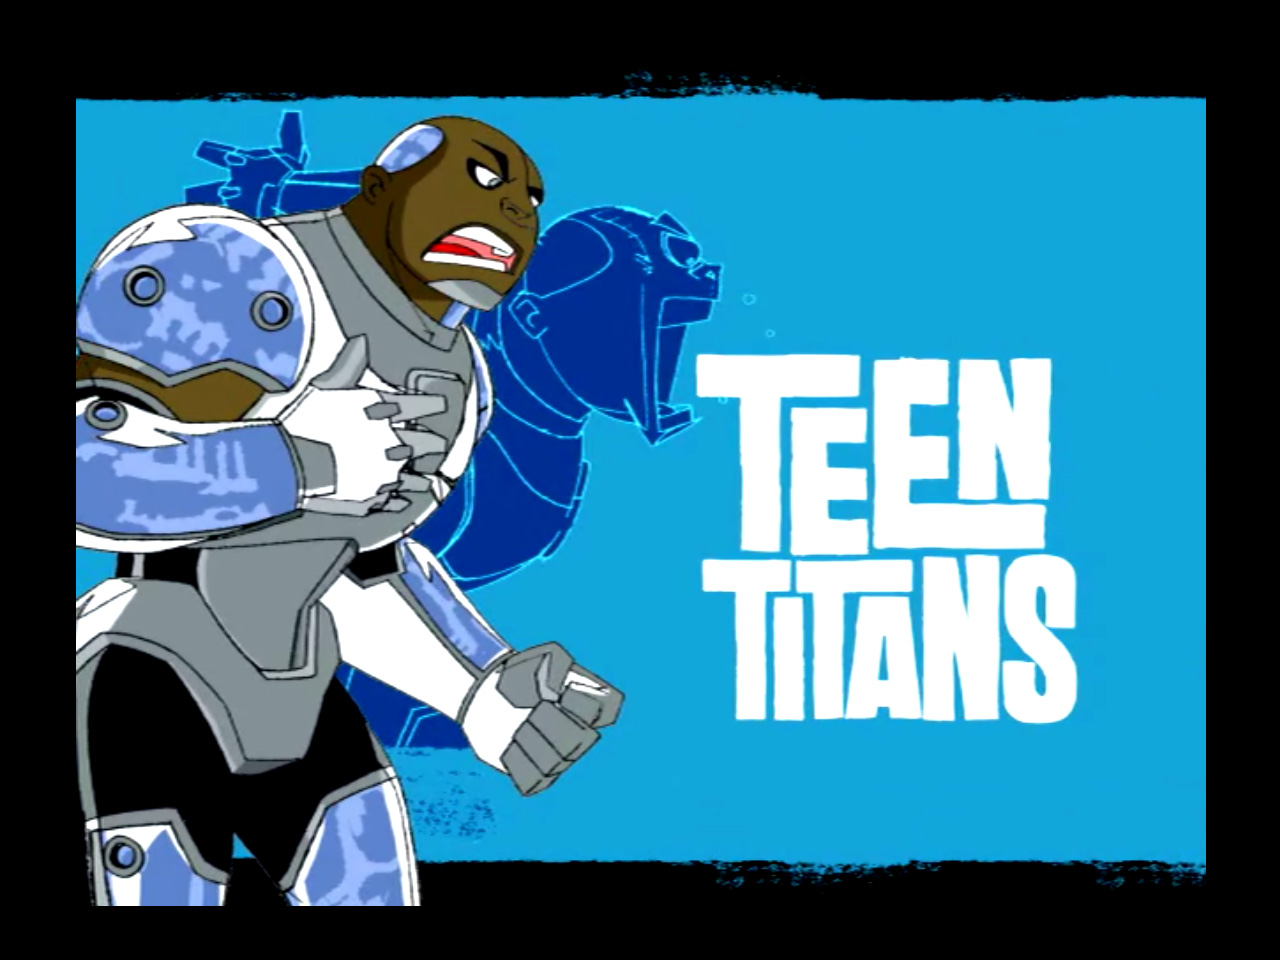 Wallpaper - Cyborg - Teen Titans Wallpaper (37386513) - Fanpop